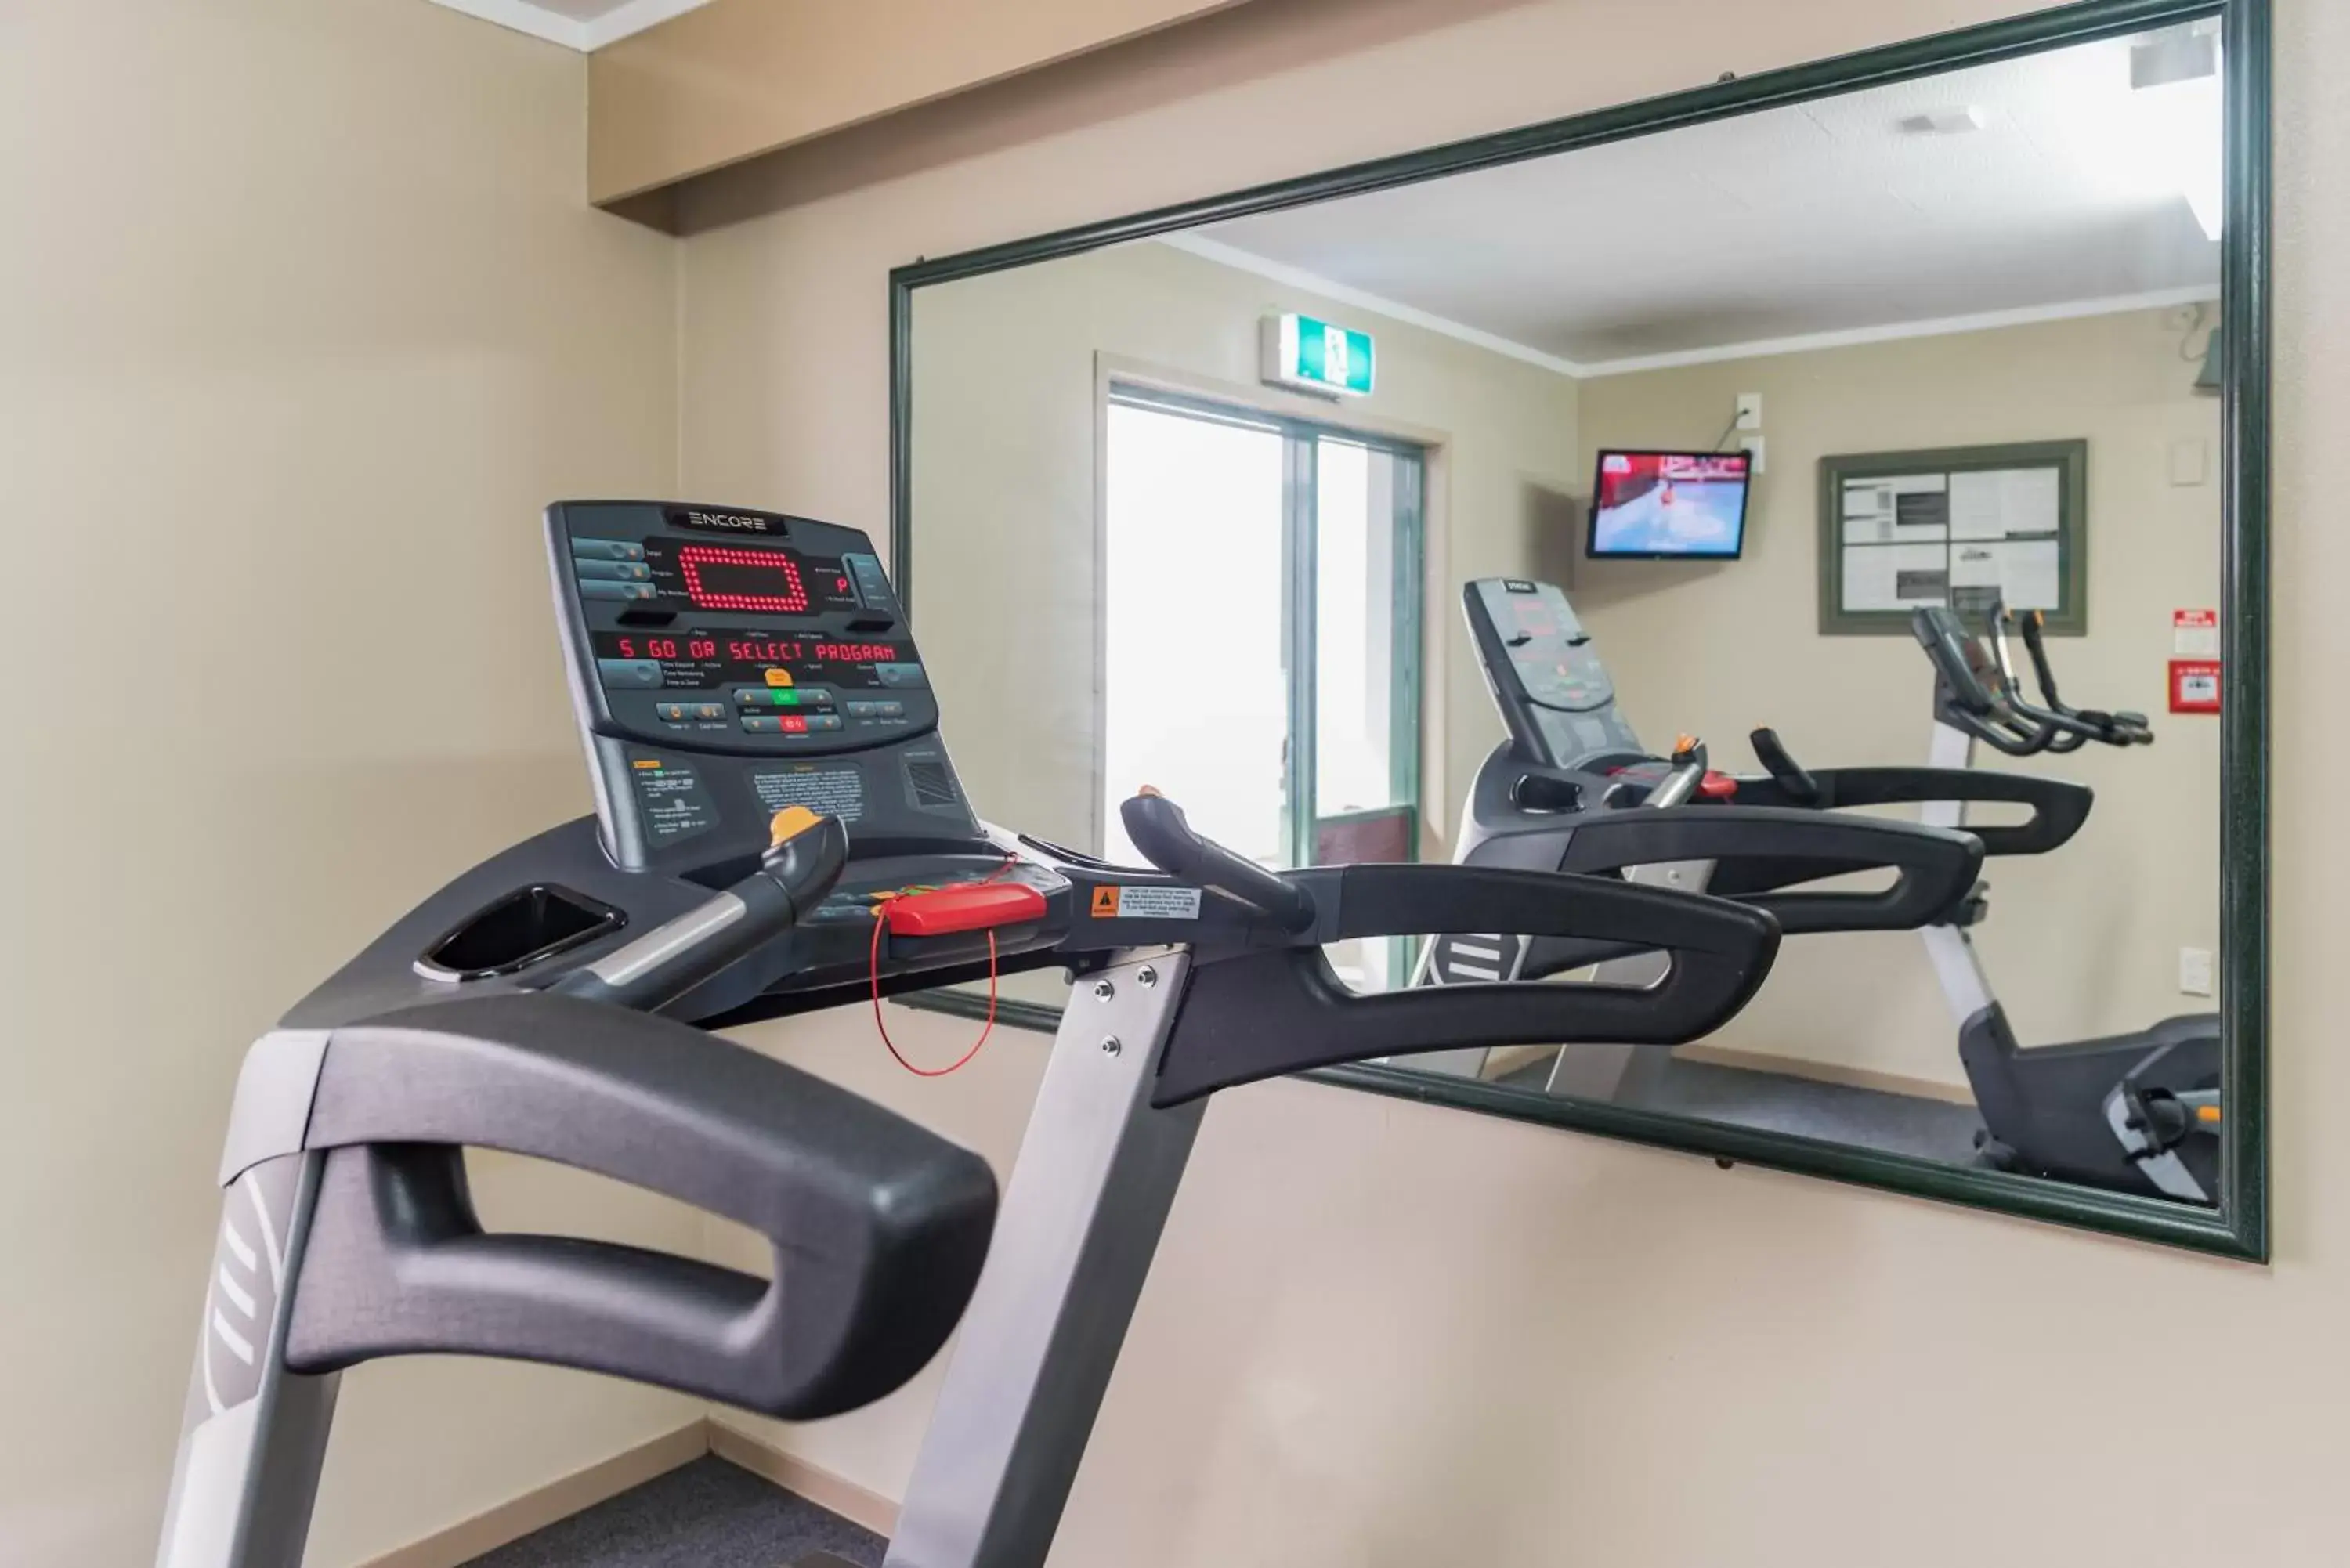 Fitness centre/facilities, Fitness Center/Facilities in Distinction Hotel Rotorua